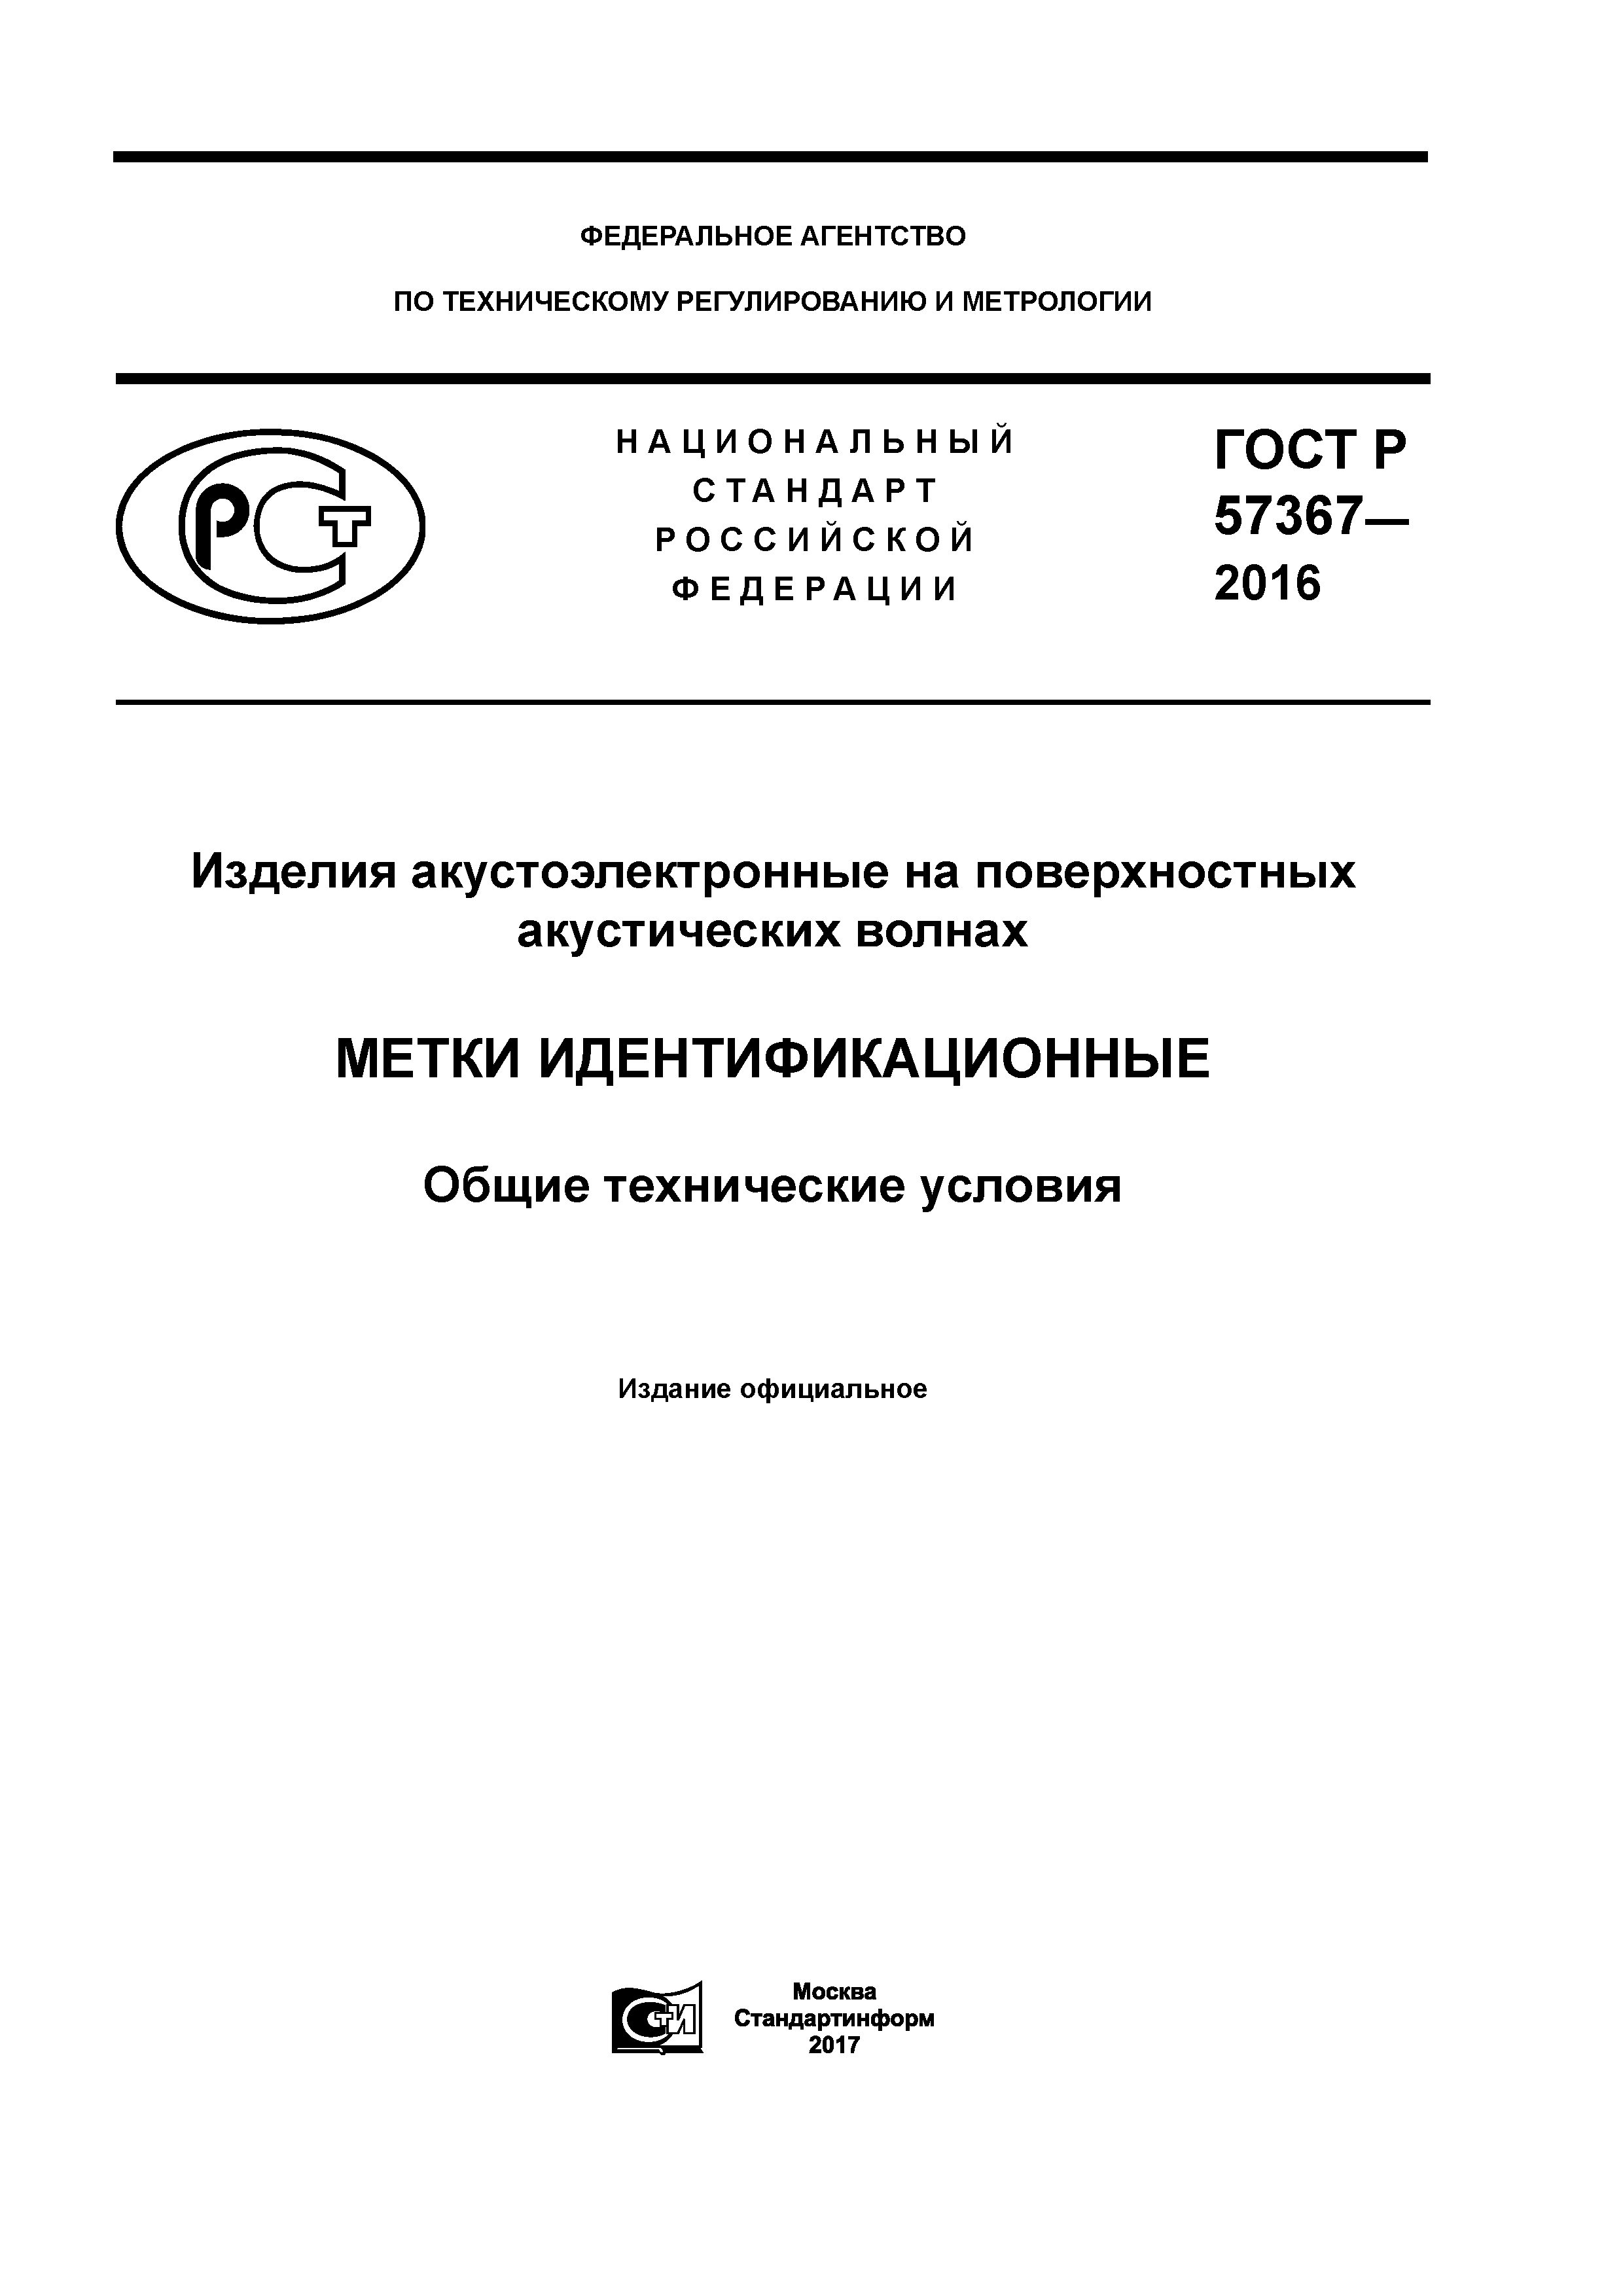 ГОСТ Р 57367-2016